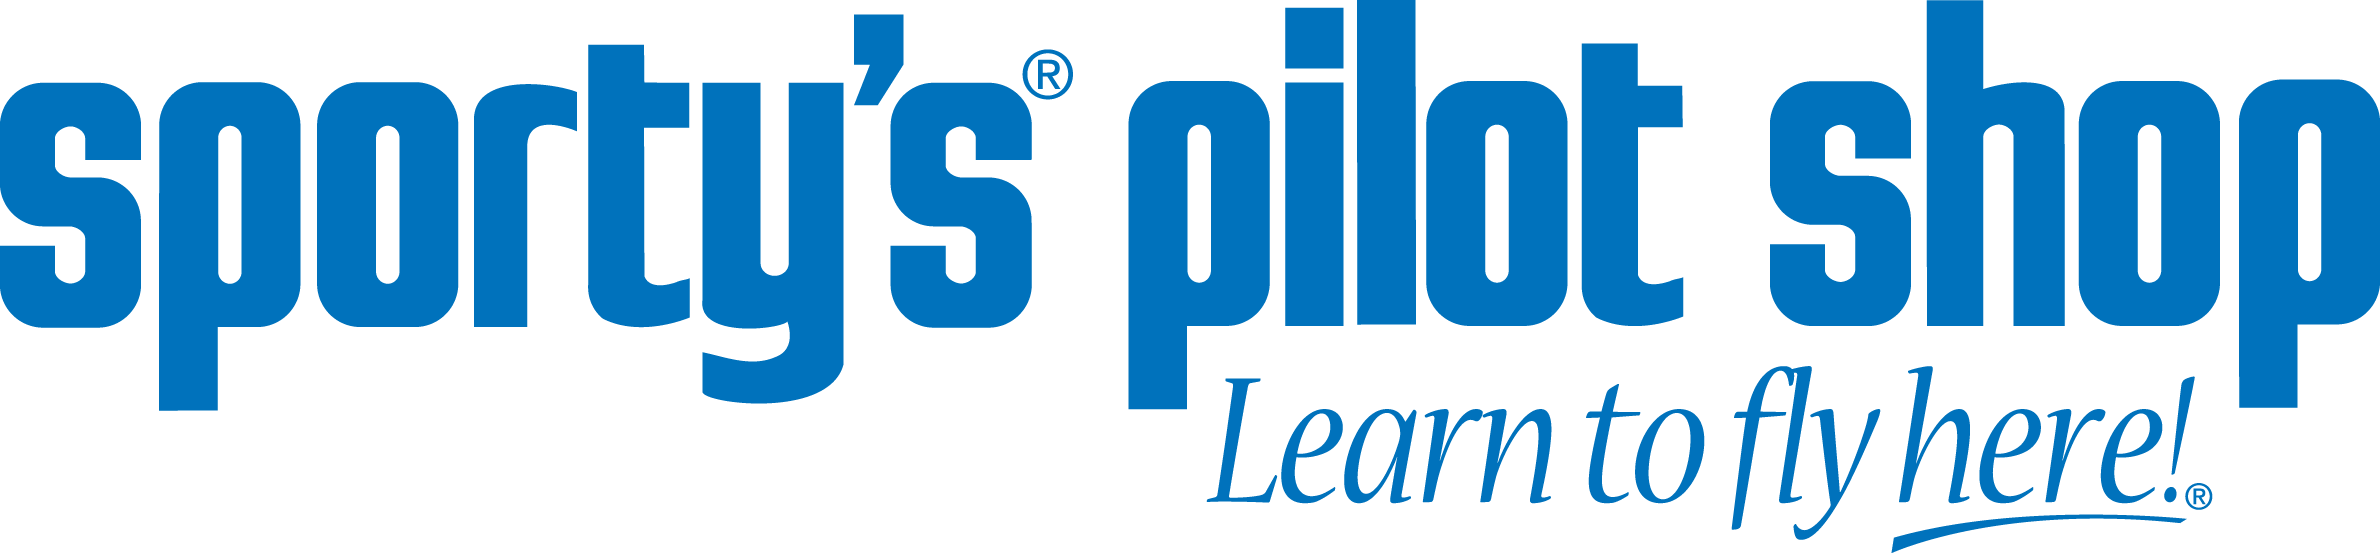 Sporty's Customer Knowledge Base logo